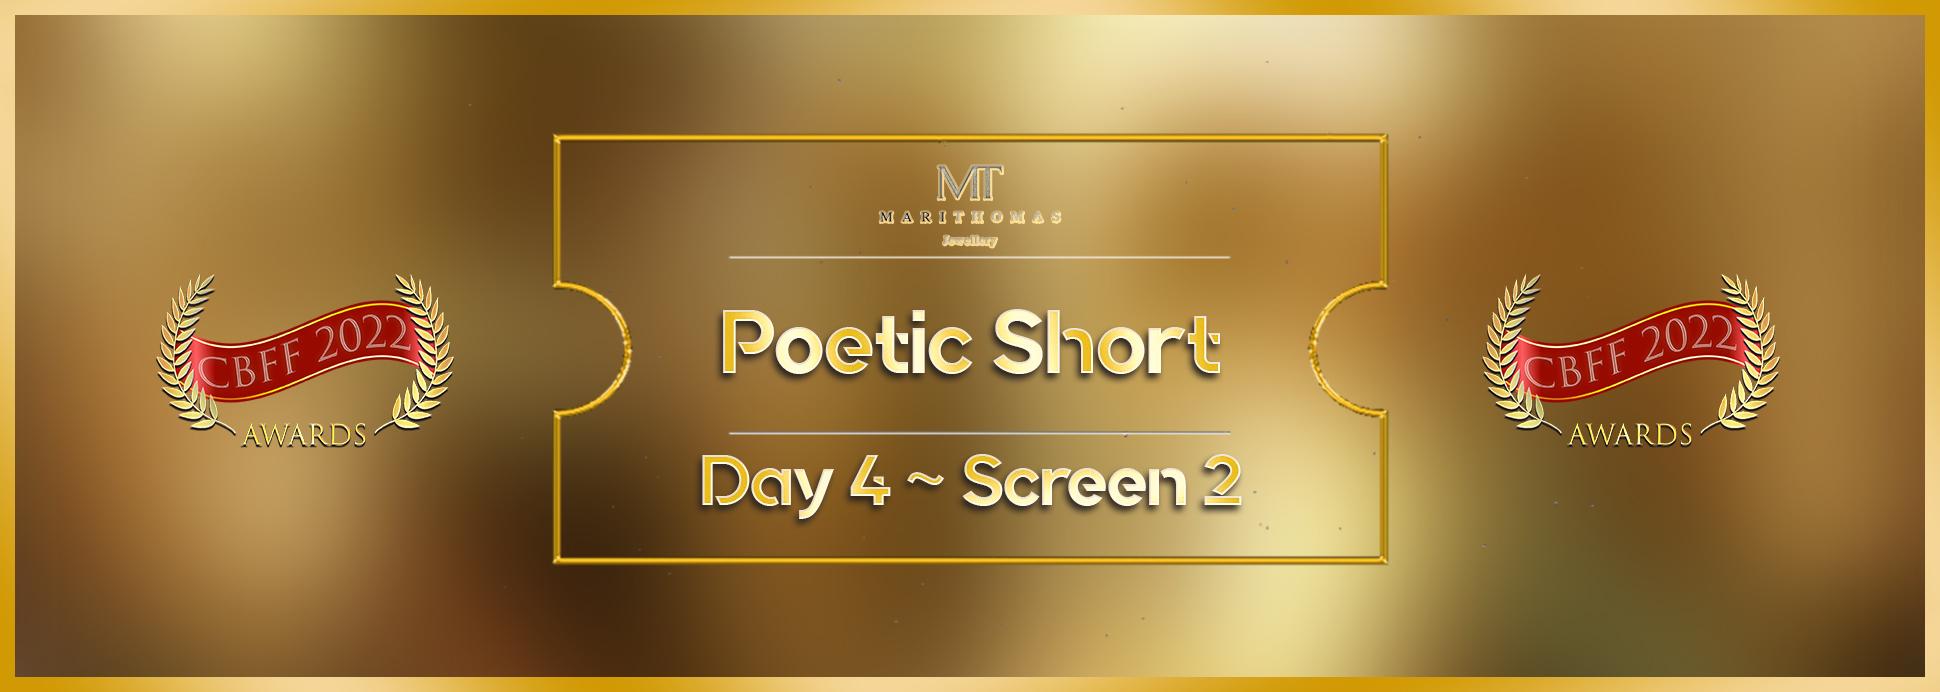 Day 4 Screen 2 Poetic Short Film